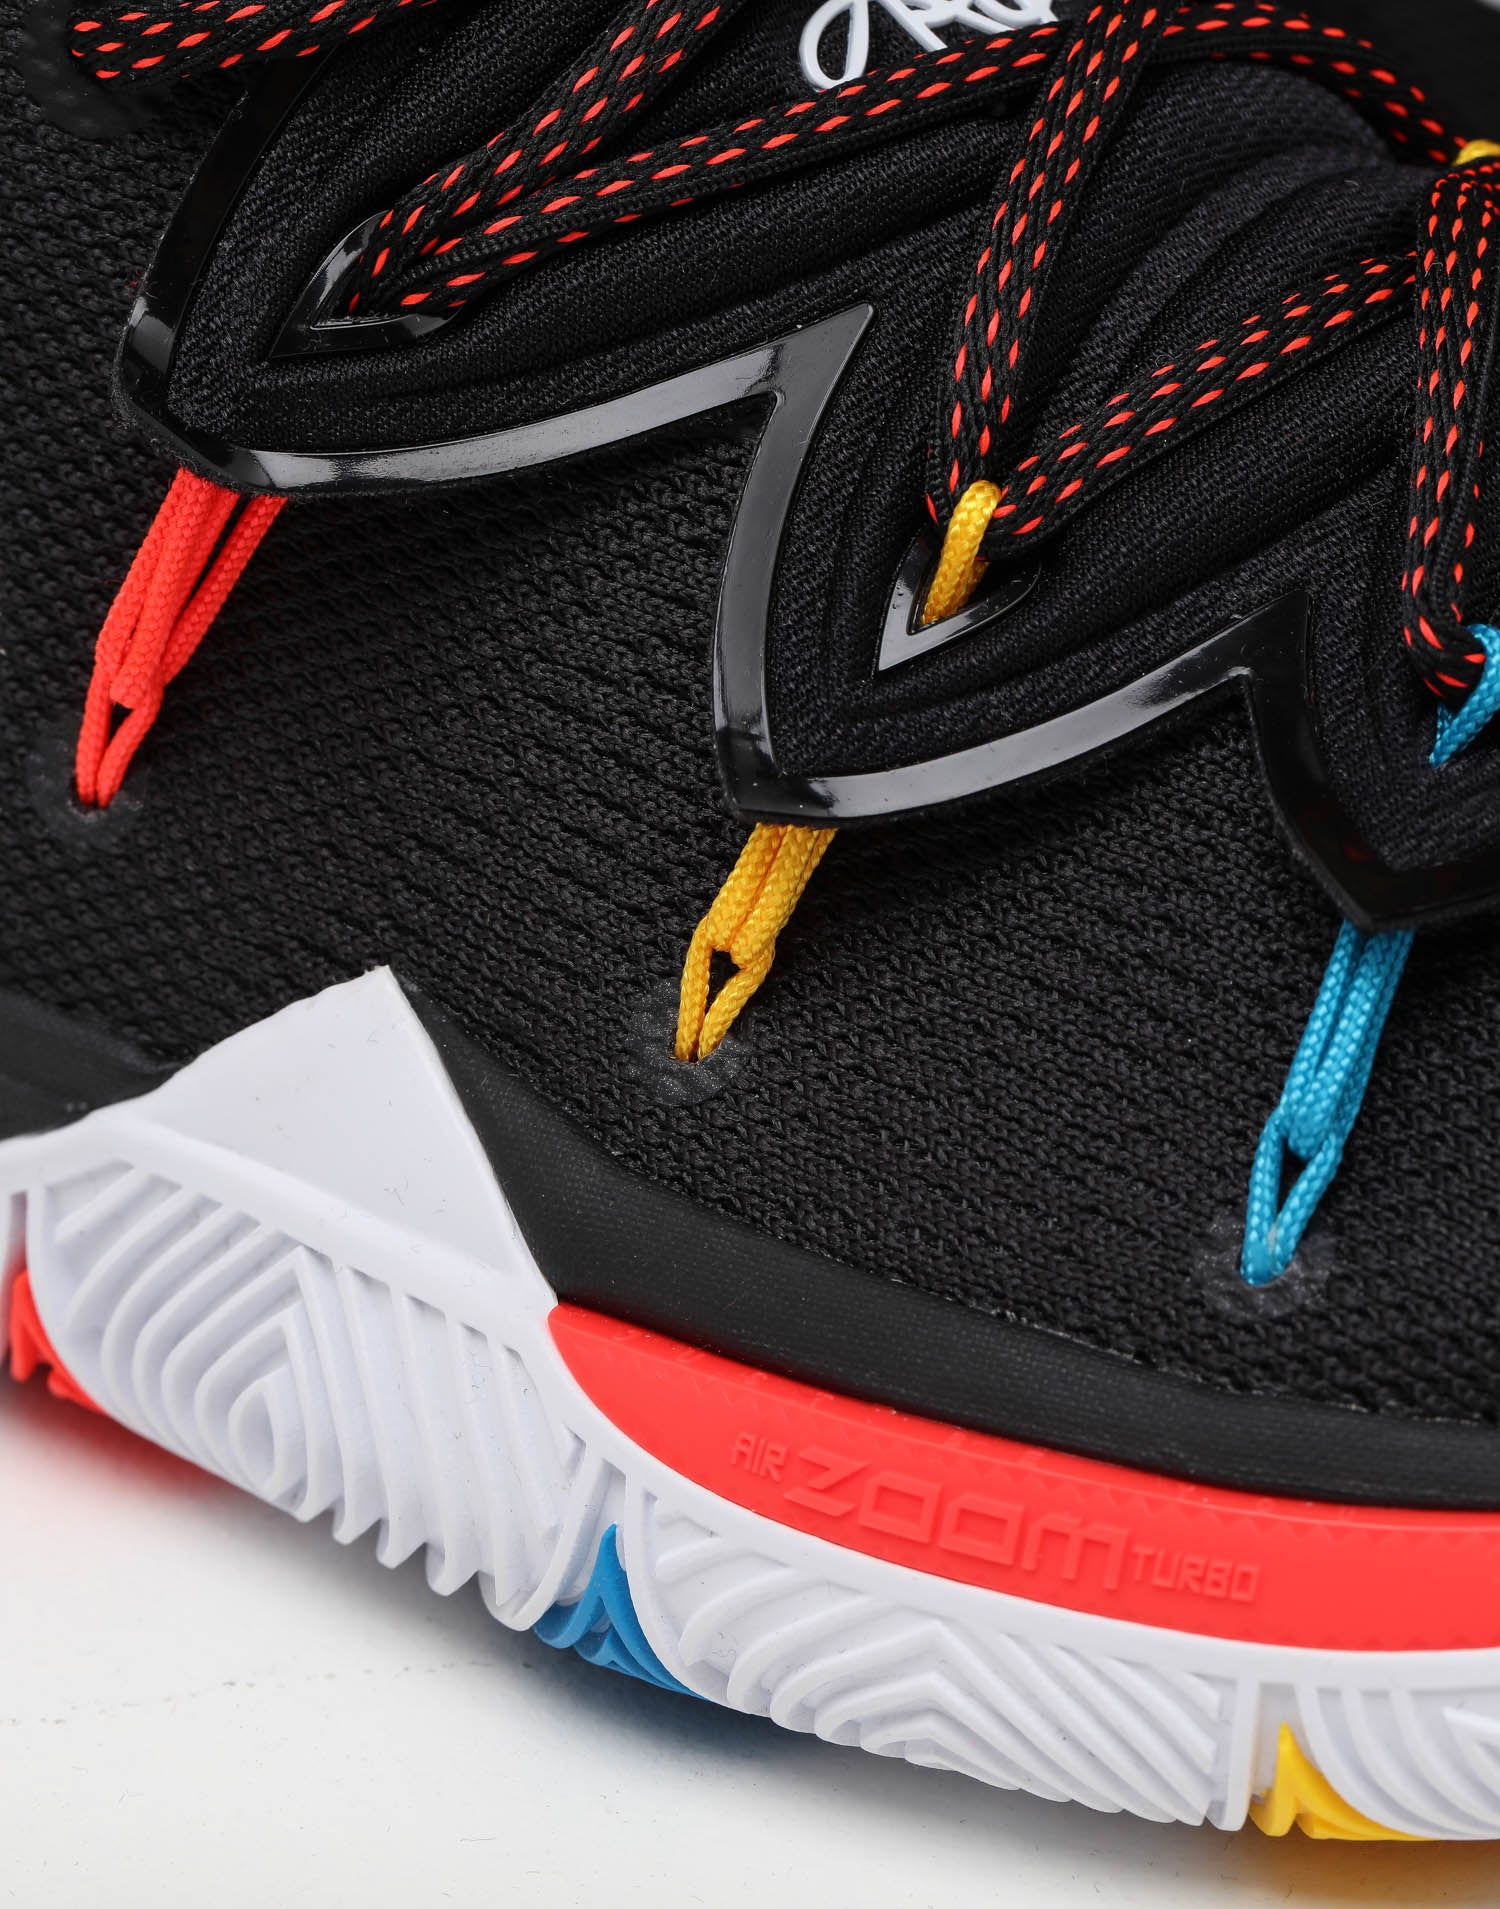 Concepts x Nike Kyrie 5 Ikhet Multi Color For Sale Scelf